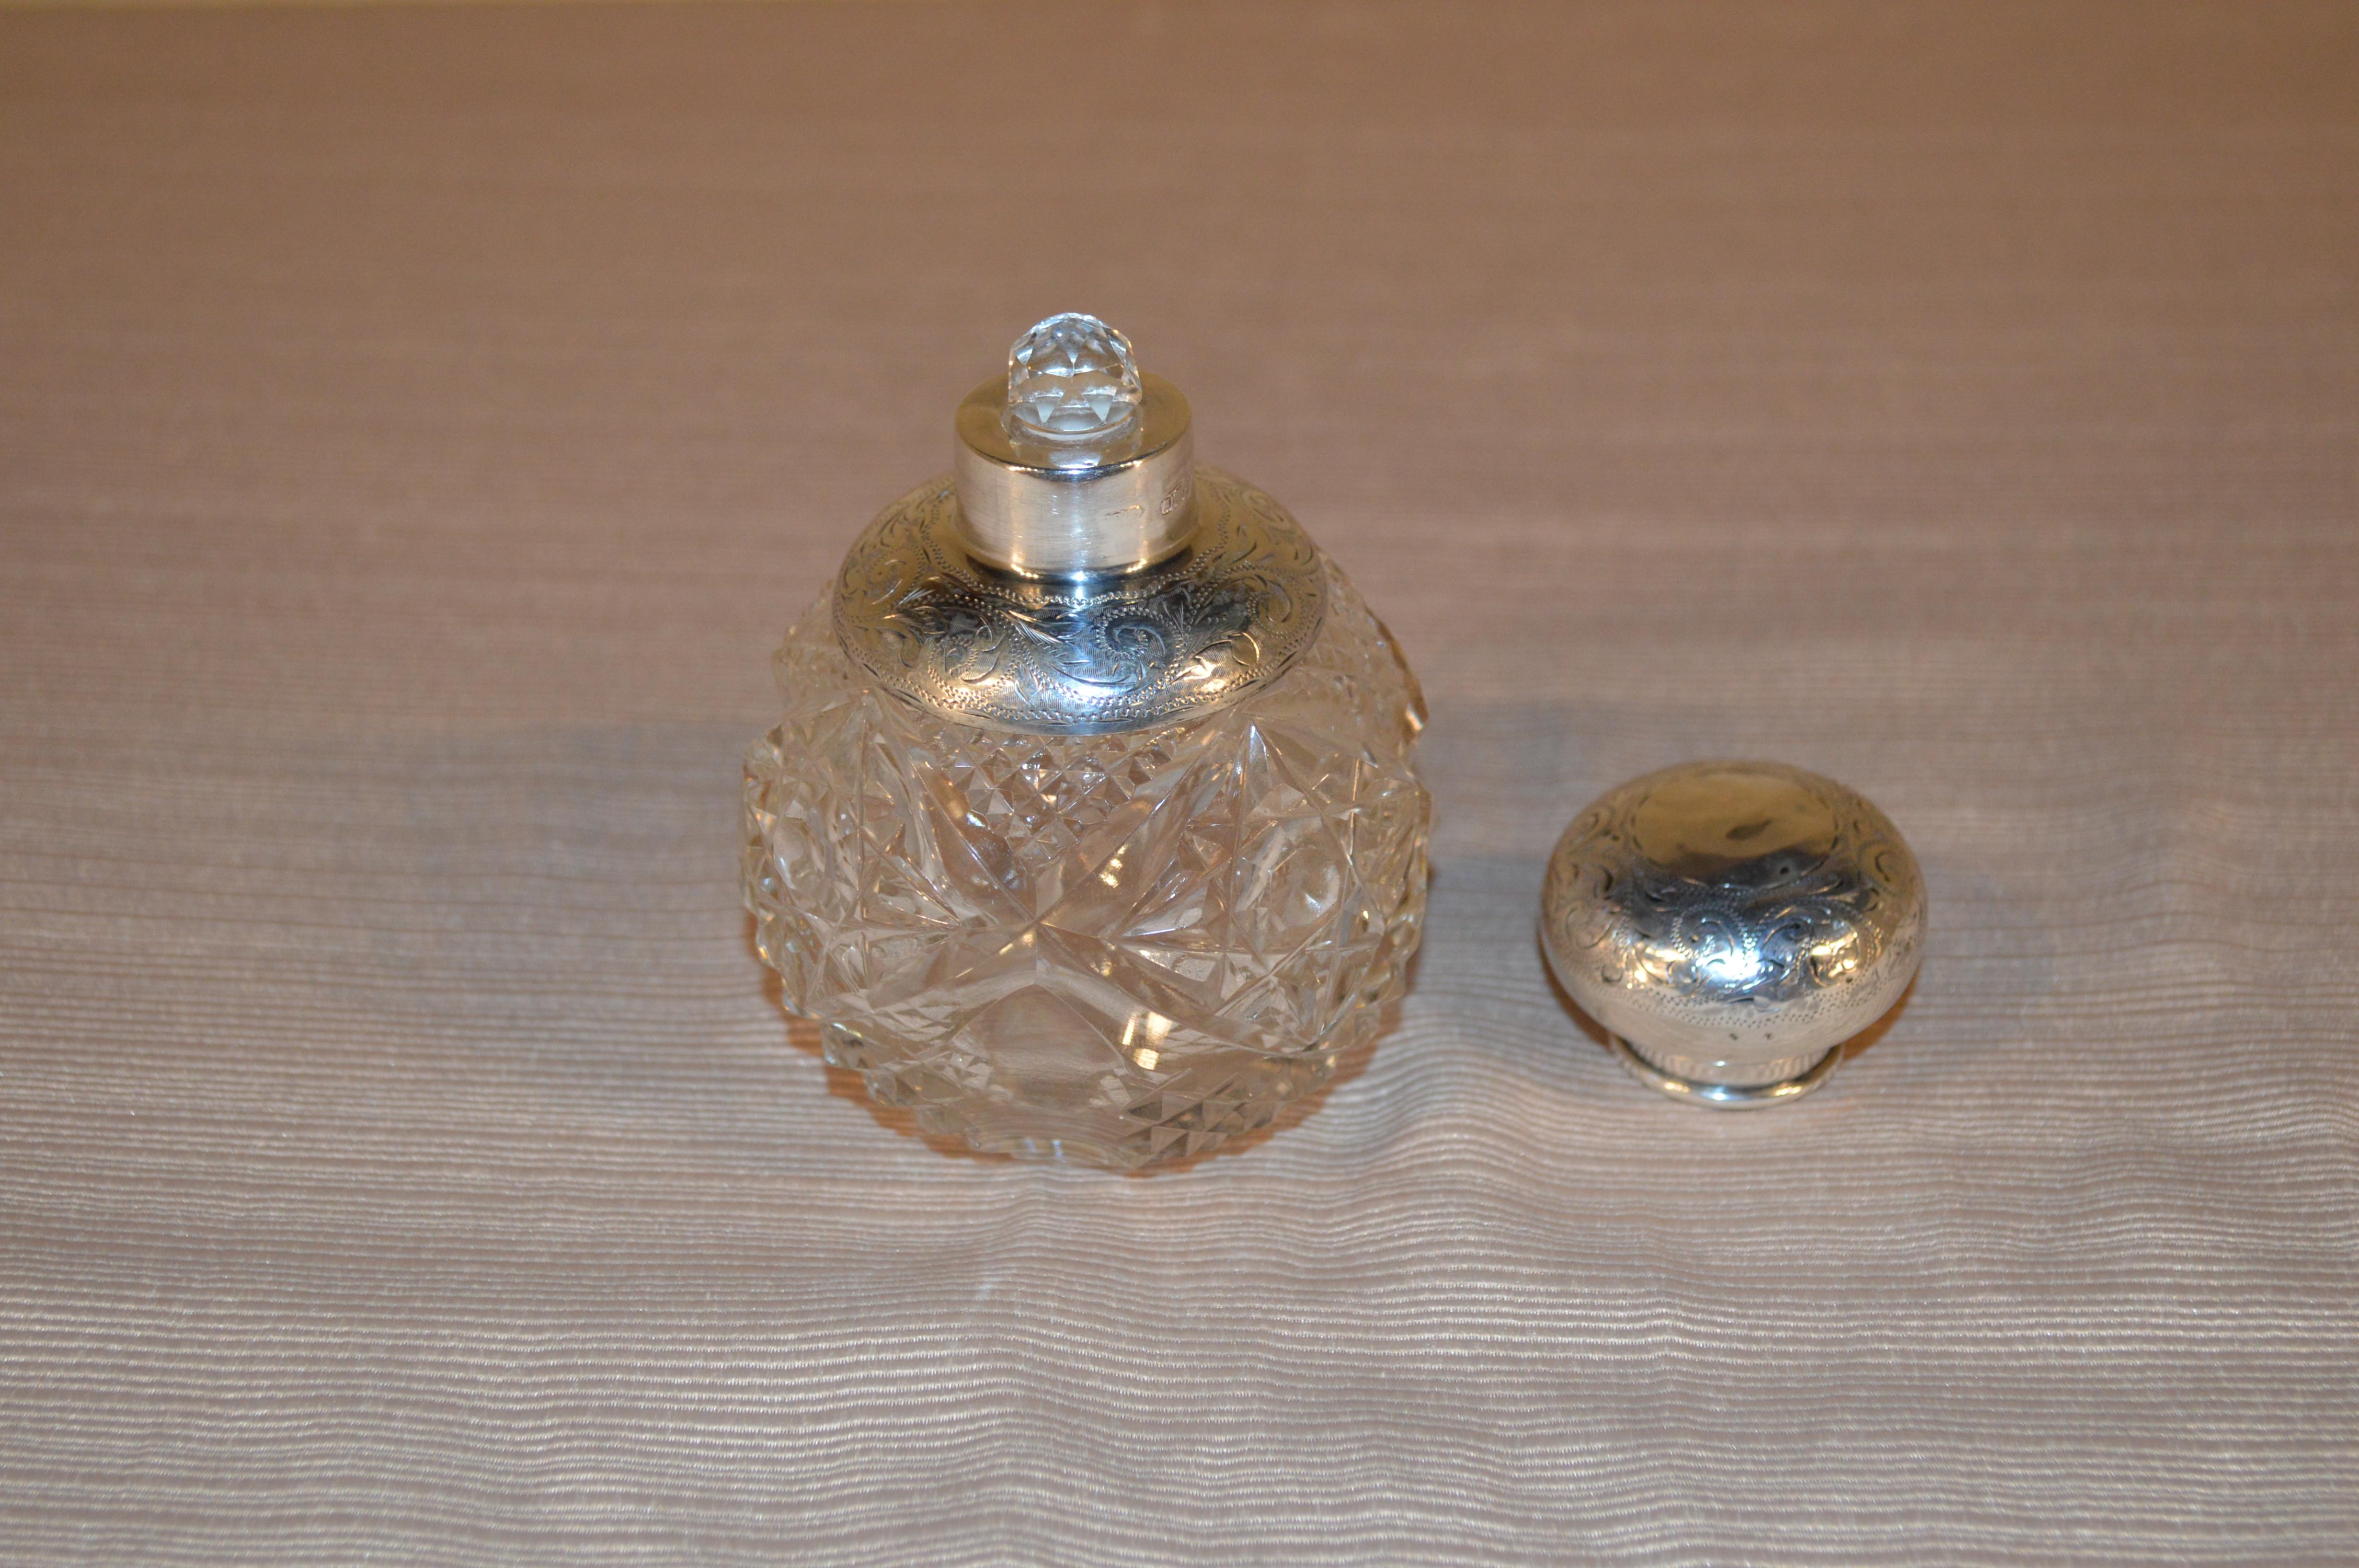 19th century perfume bottles